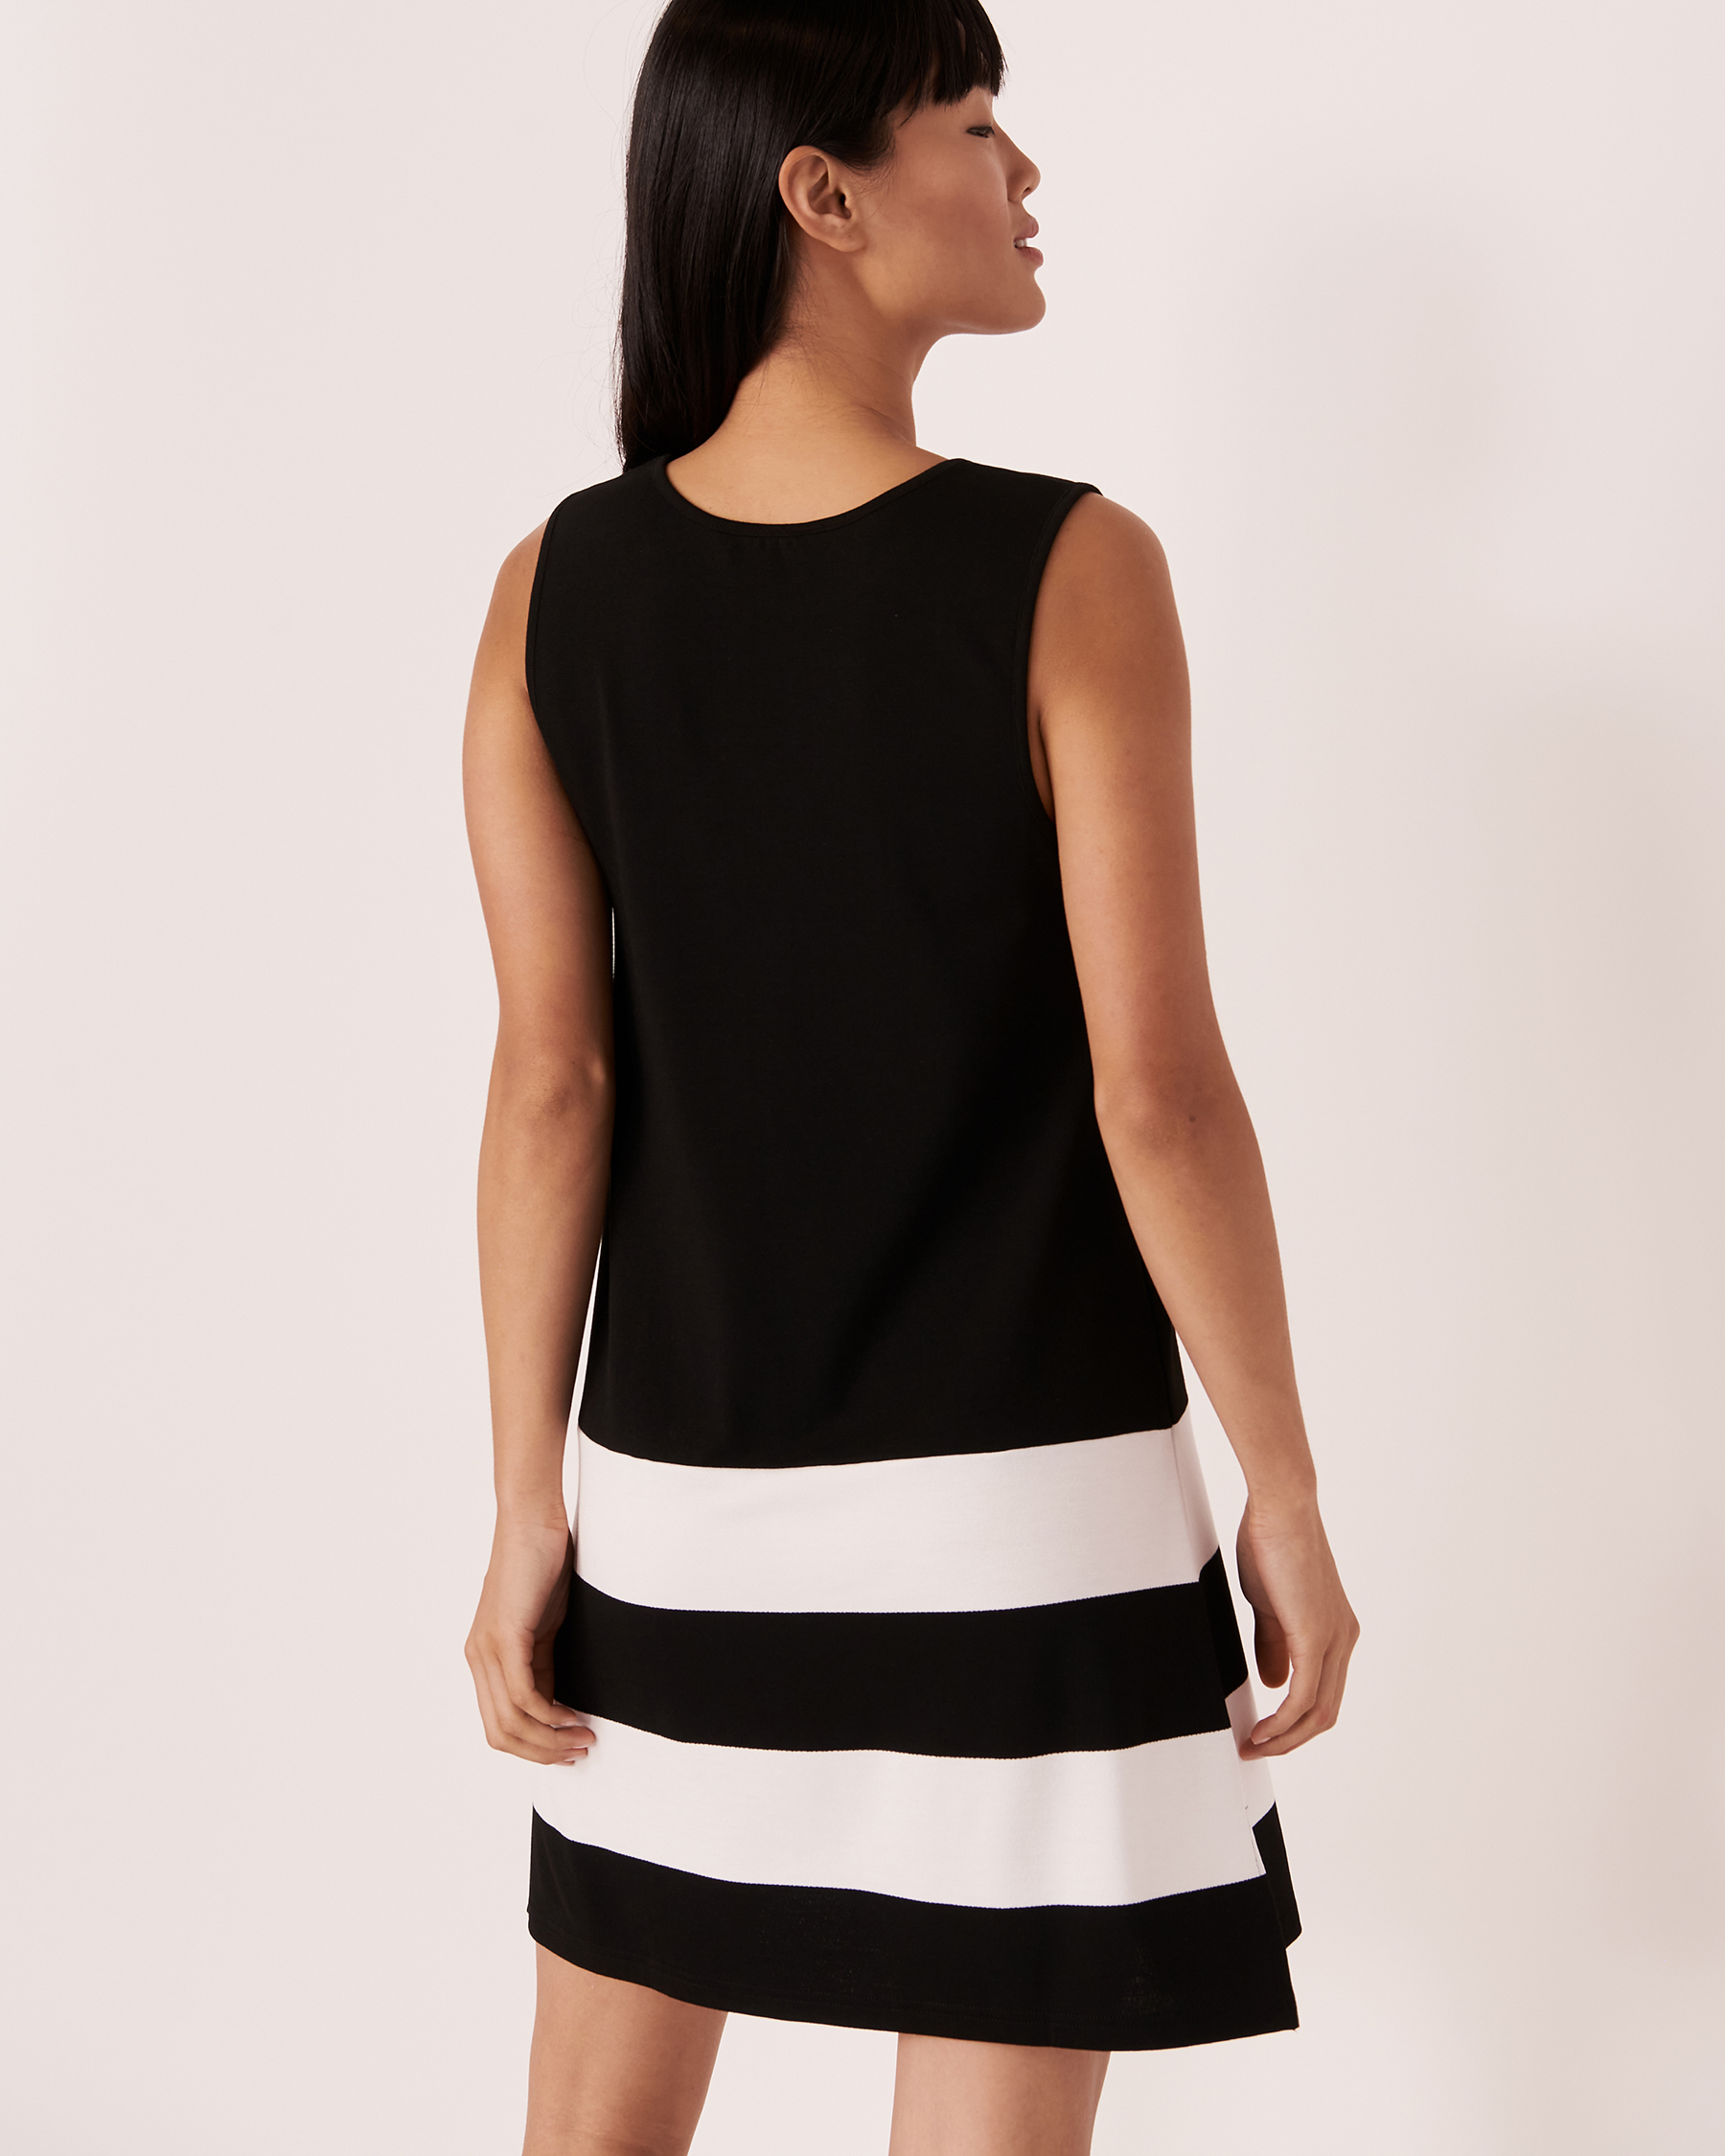 LA VIE EN ROSE AQUA Straight Fit Mini Dress Black and white detail 80300025 - View2